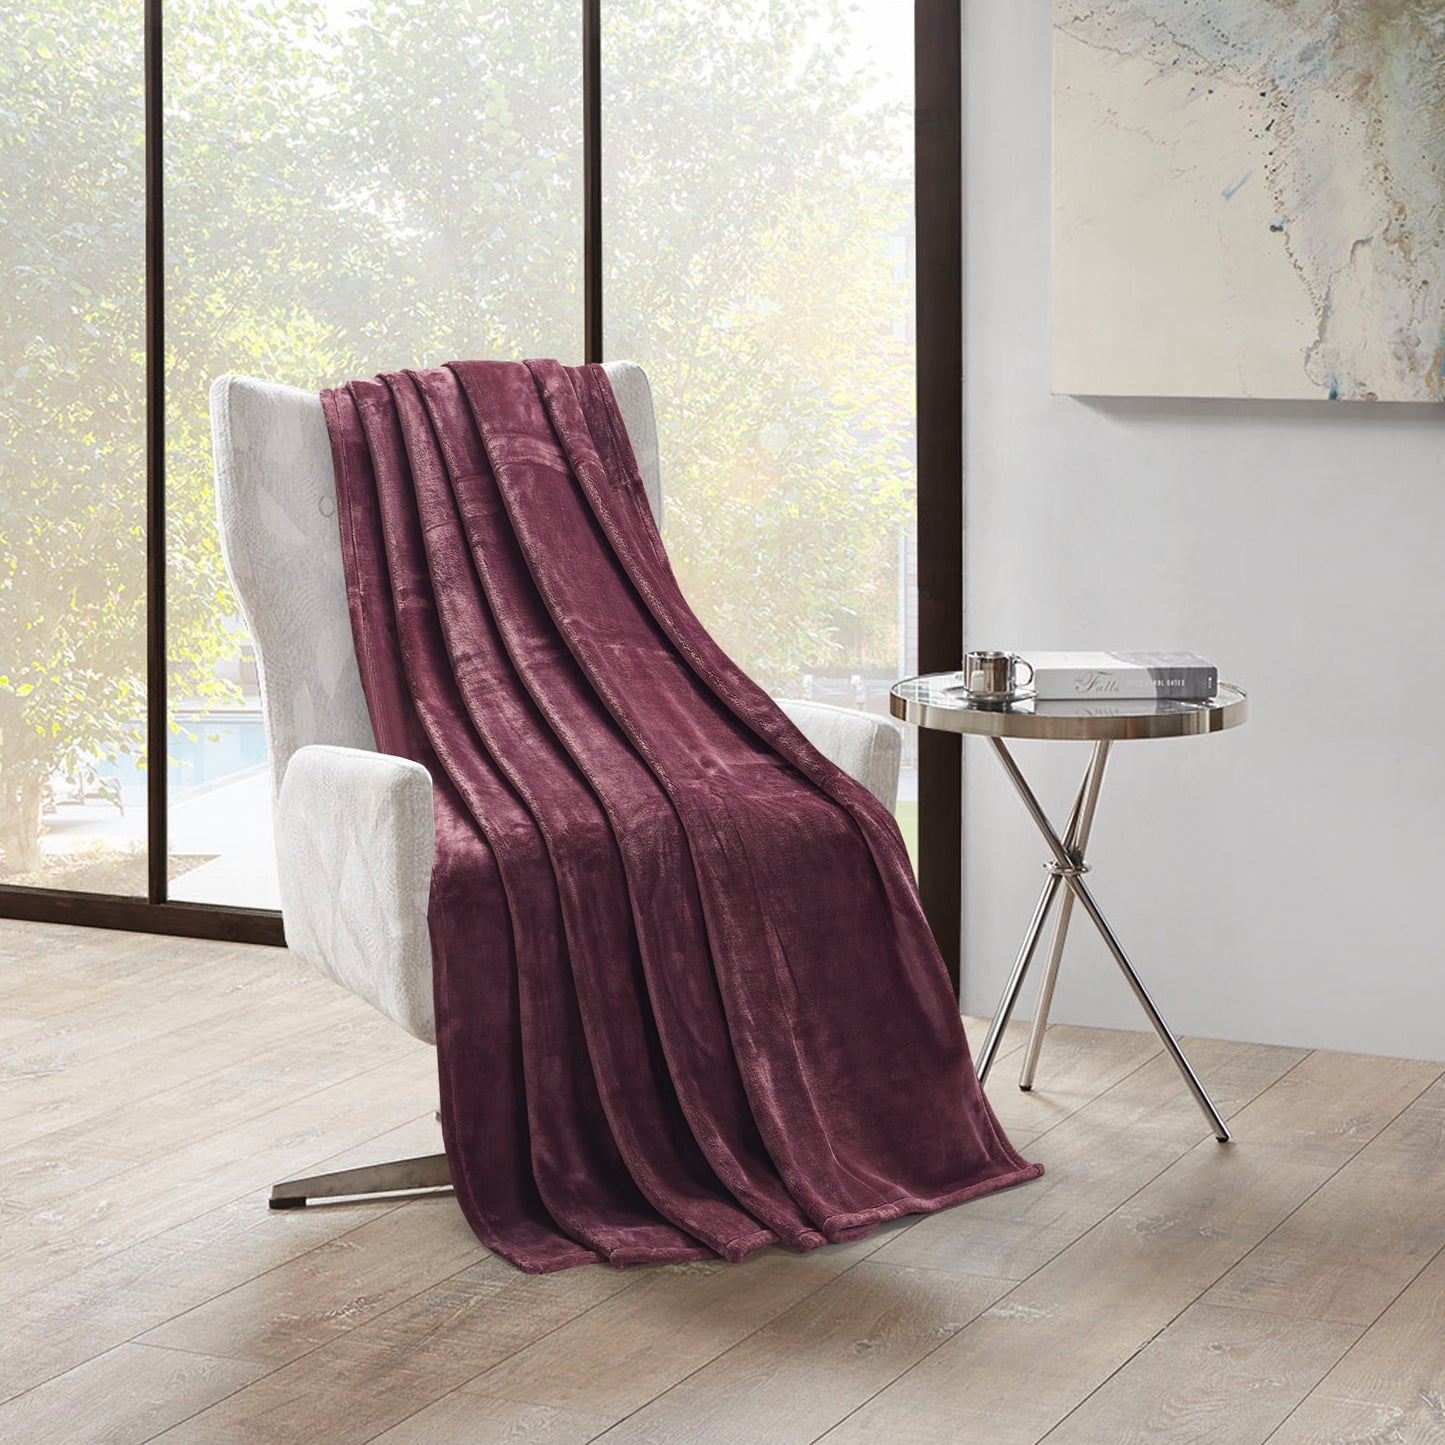 400 Series Solid Plush Blanket - Merlot